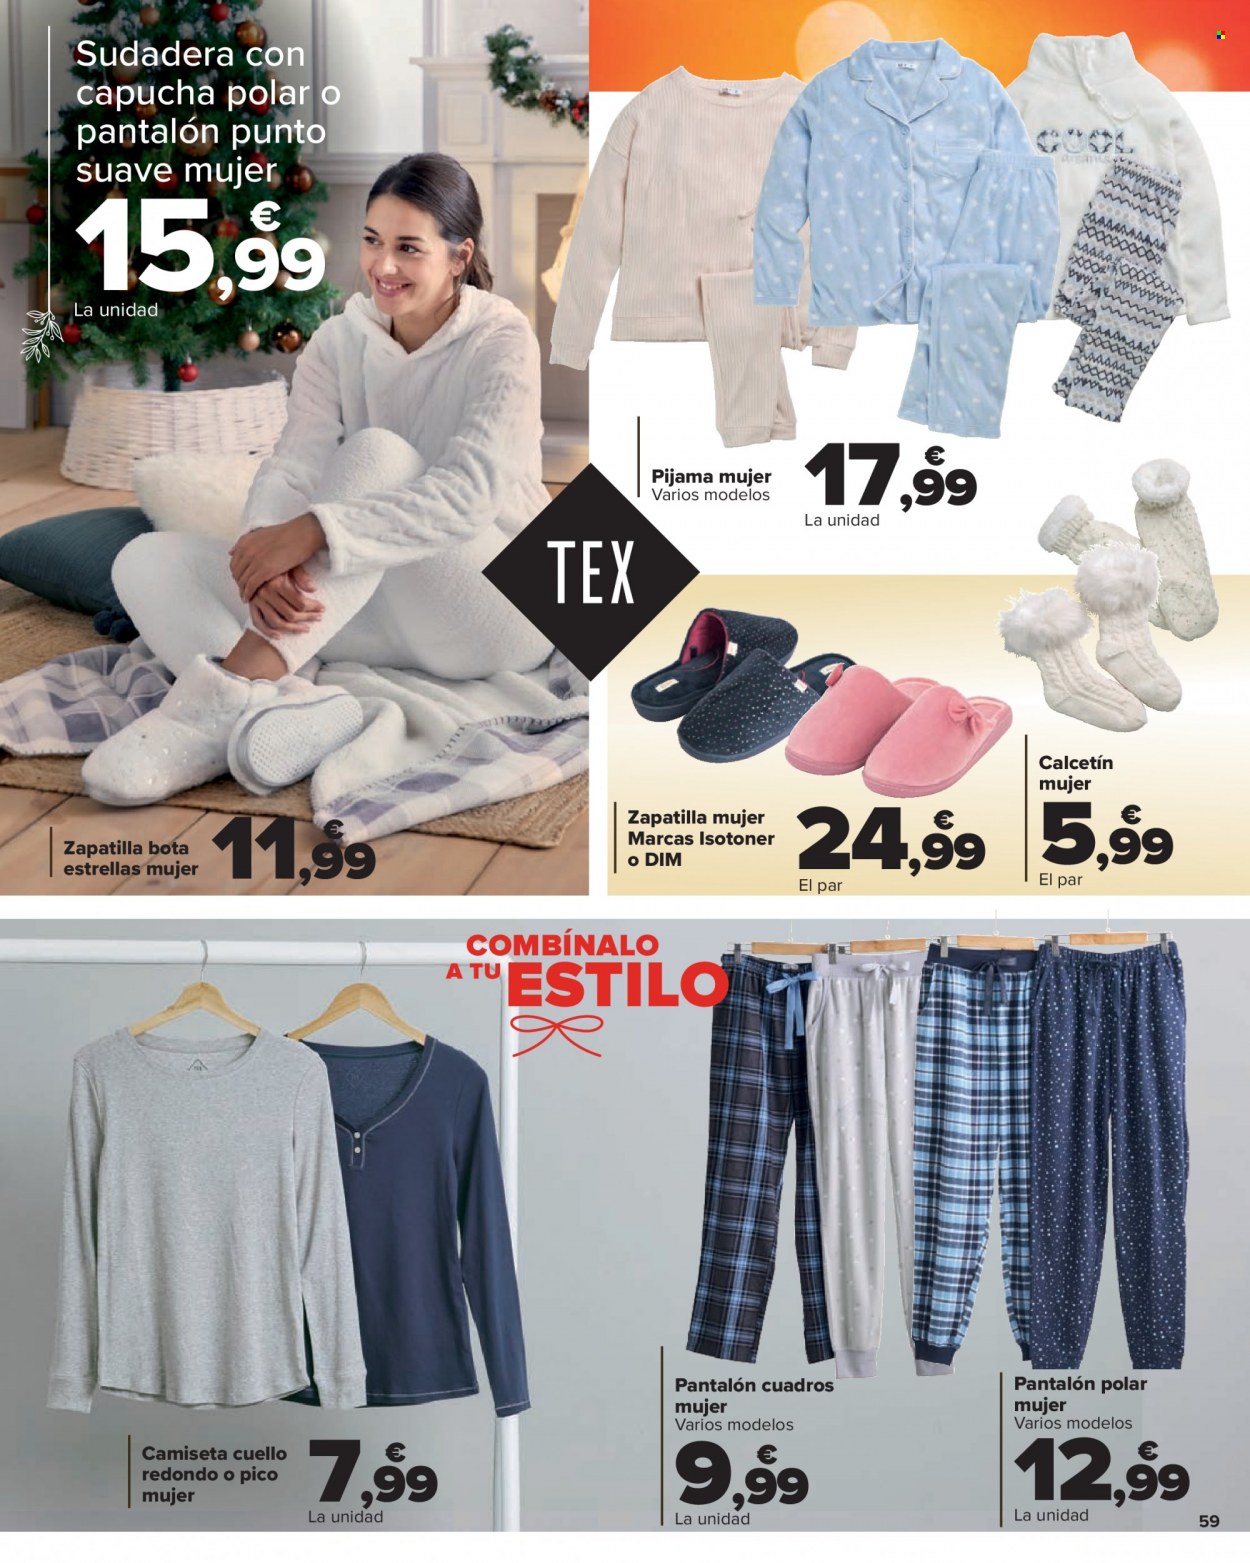 thumbnail - Folleto actual Carrefour - 01/12/22 - 08/01/23 - Ventas - zapatilla, botas, camiseta, pantalón, sudadera, pijama. Página 59.